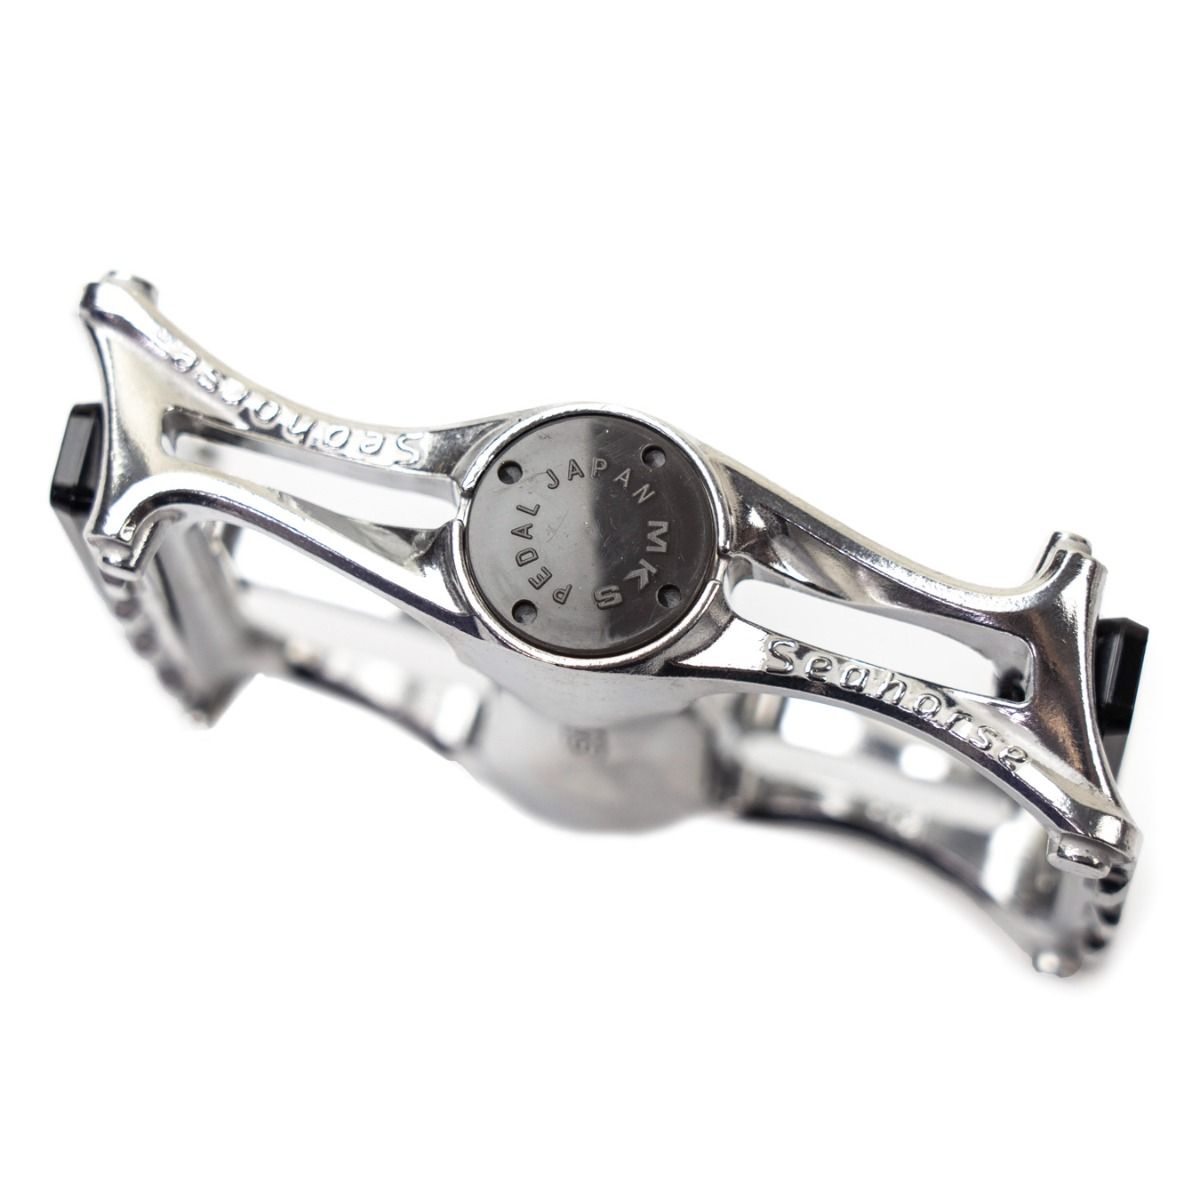 MKS Seahorse Pedal (Silver)